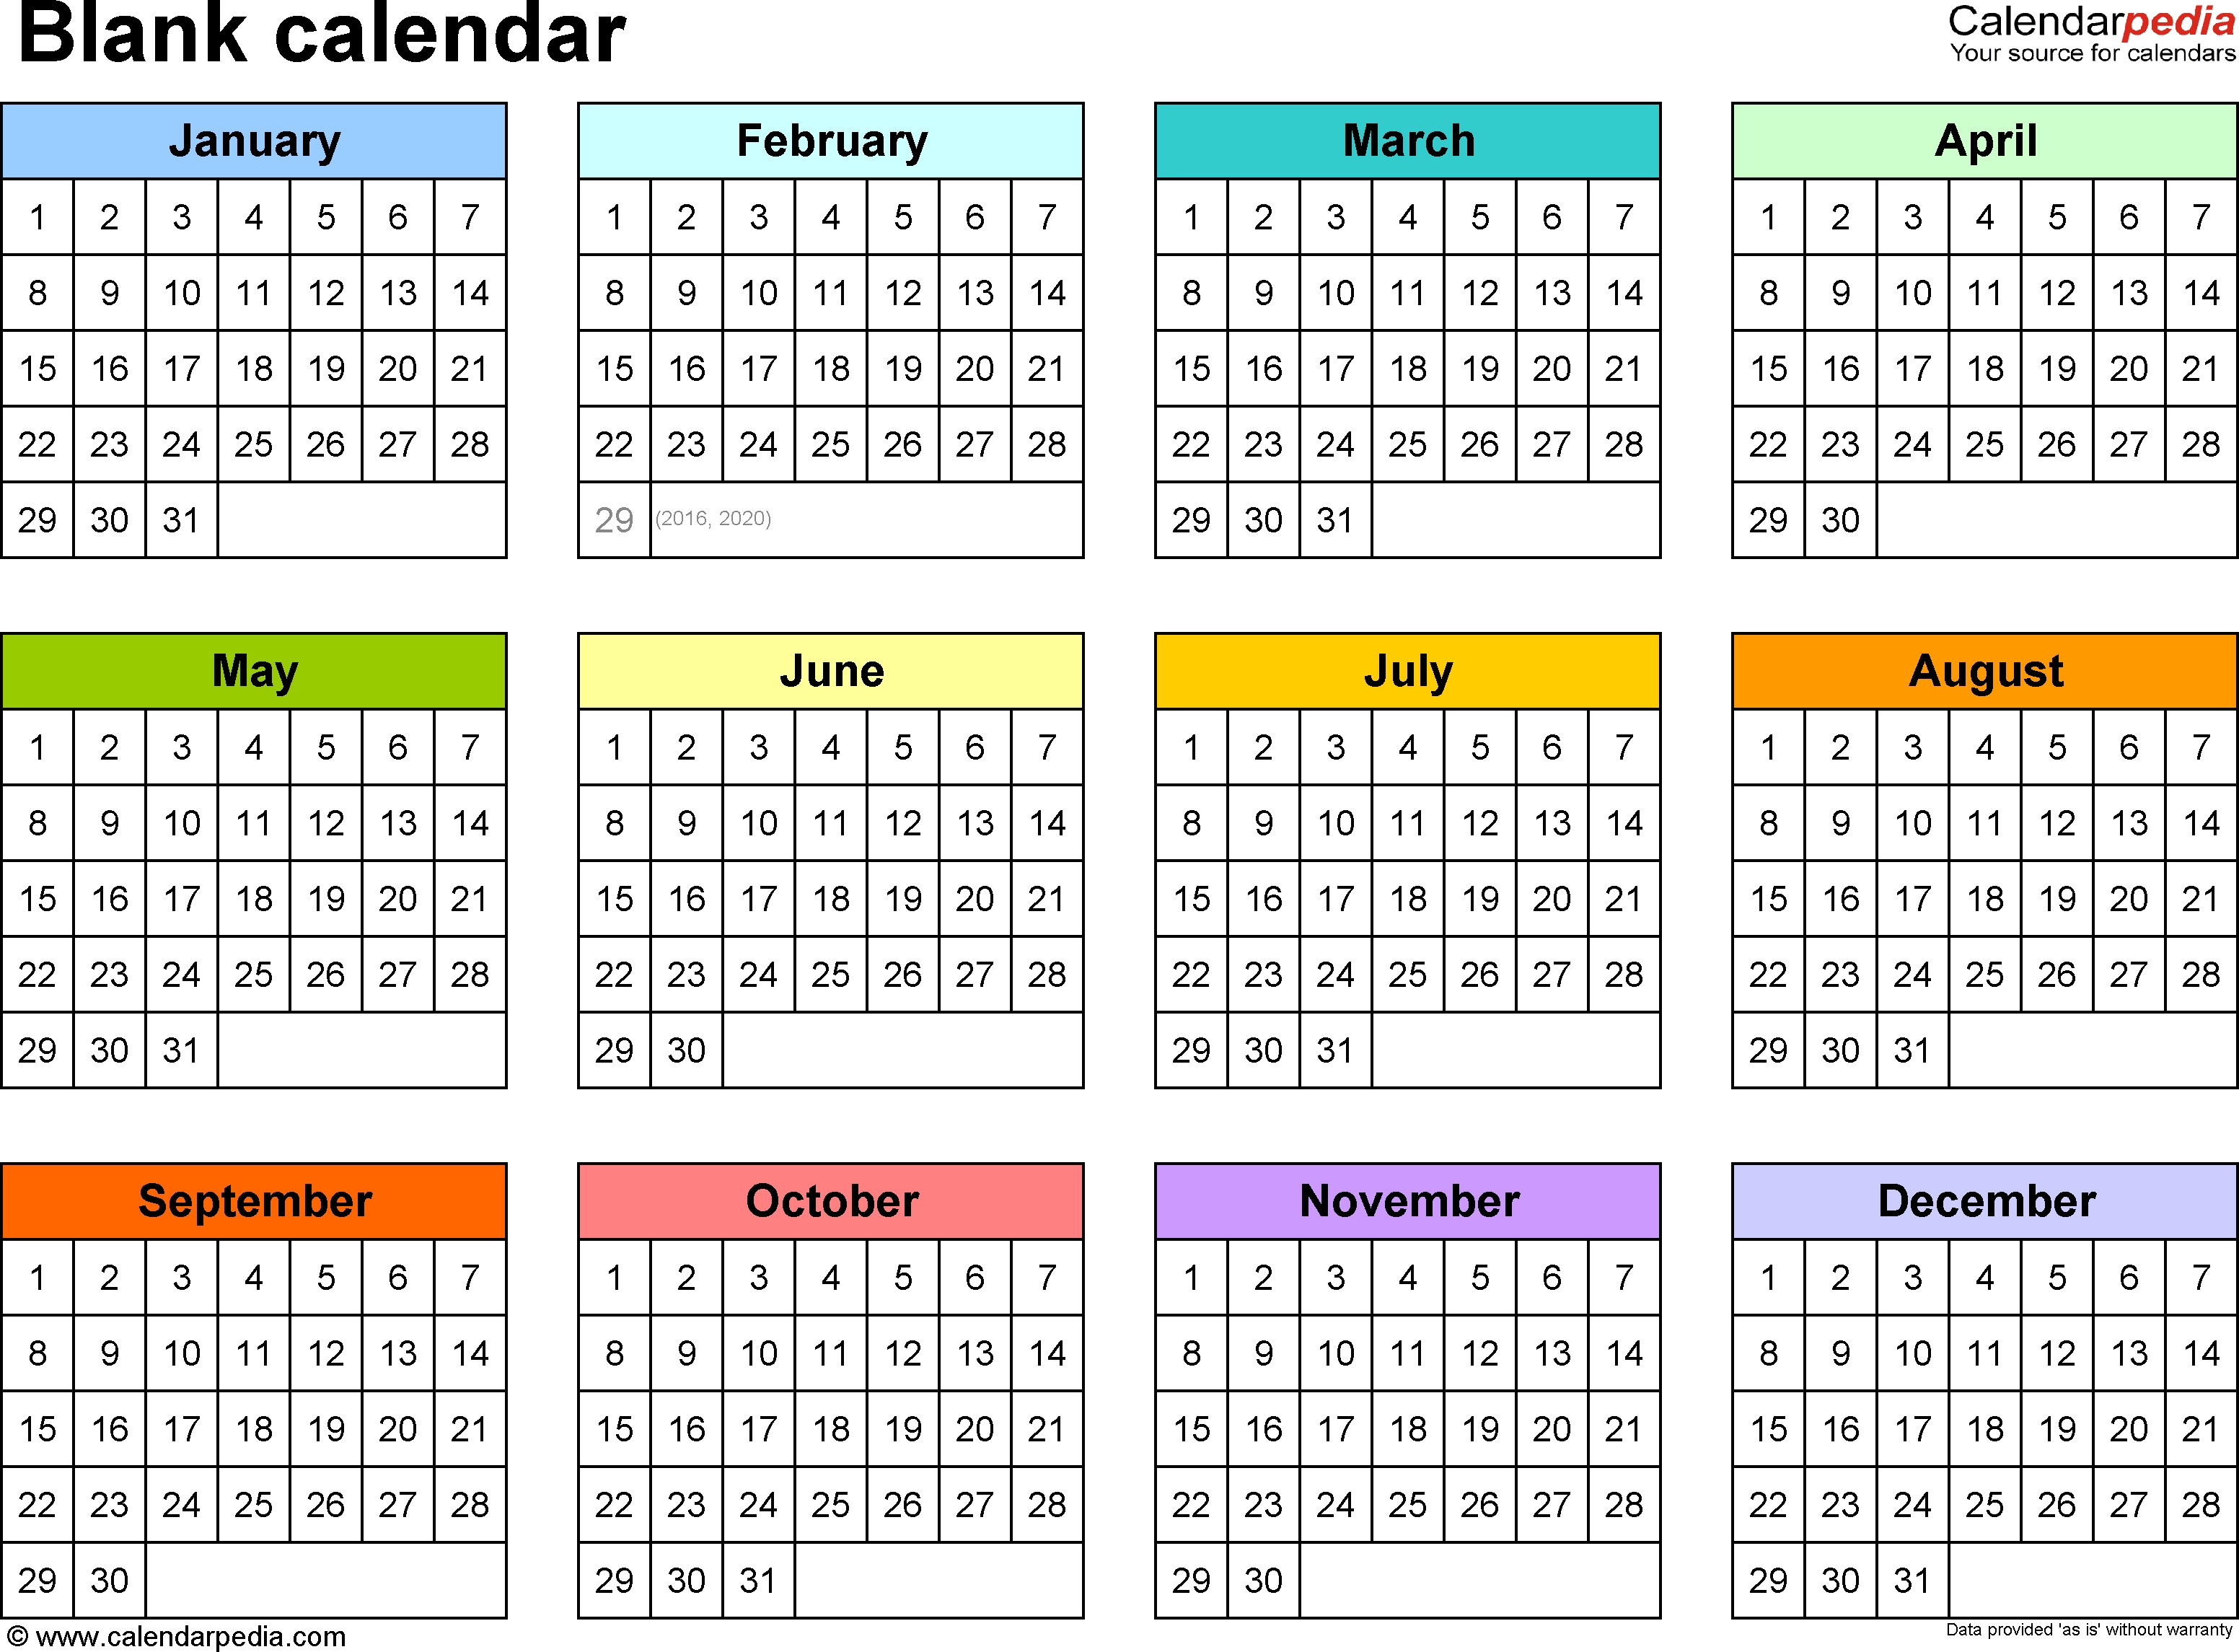 Blank Calendar - 9 Free Printable Microsoft Word Templates Blank Calendar Year Template